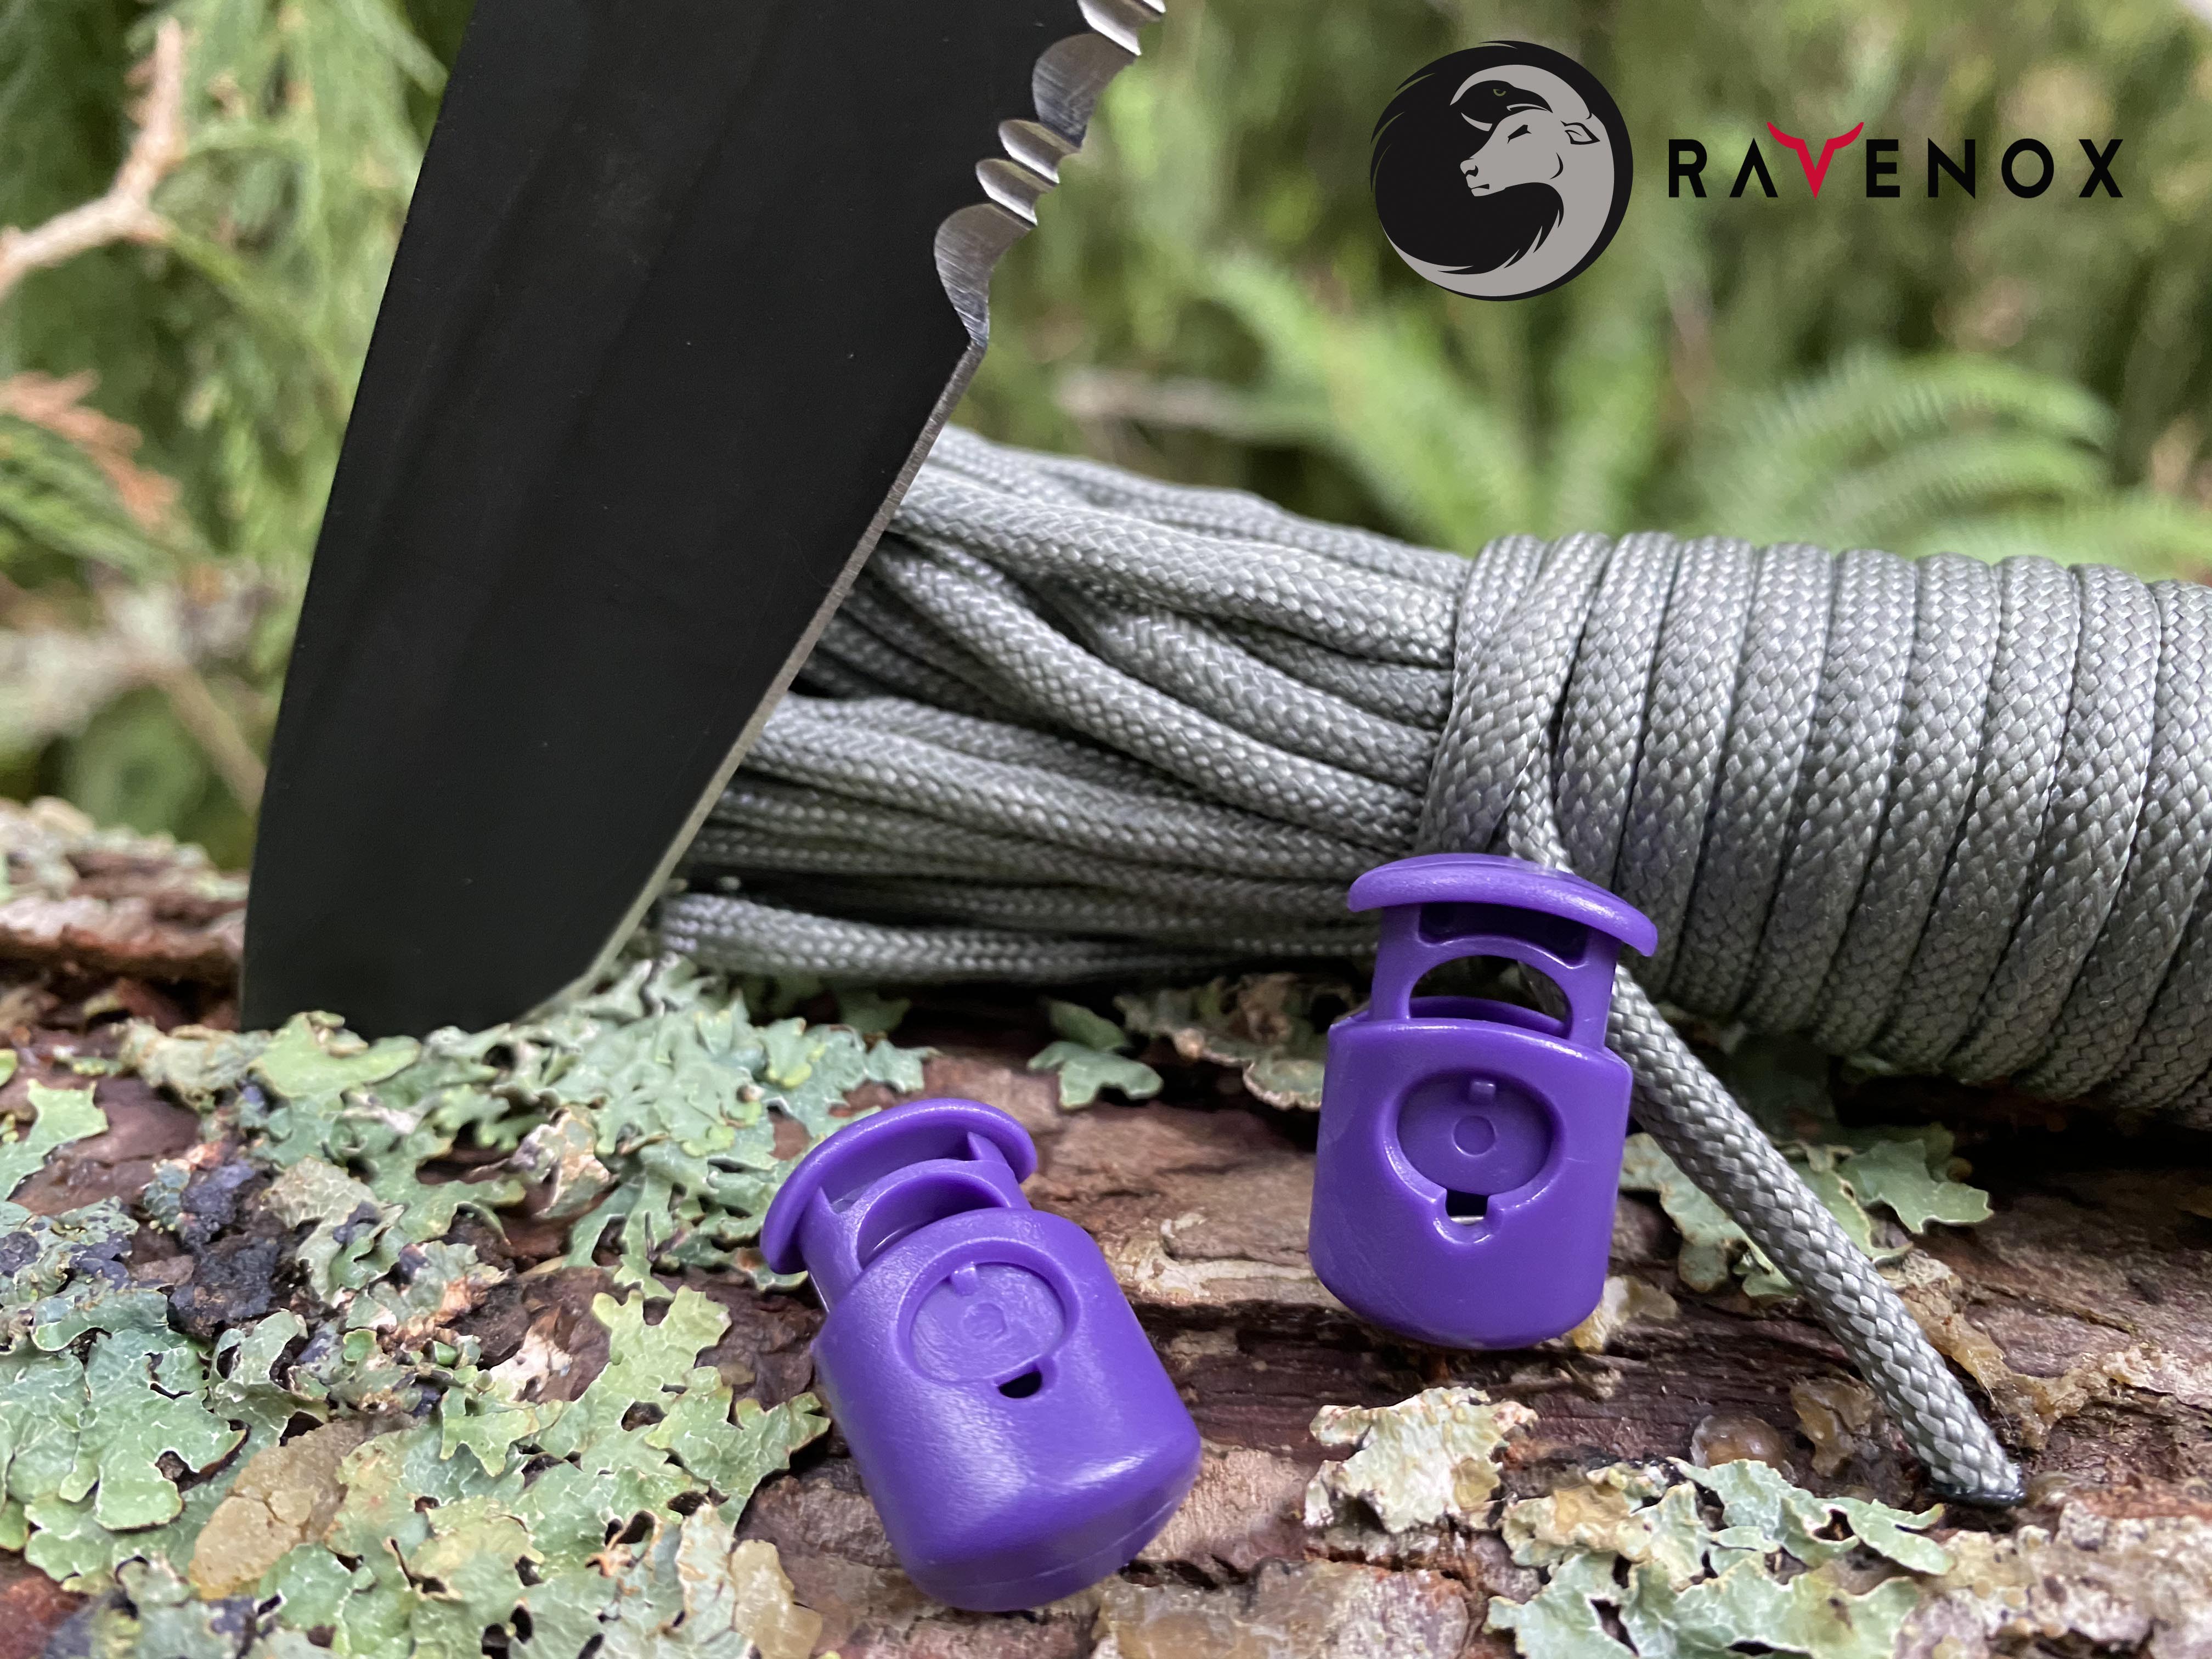 Ravenox Heavy Duty Barreloc Cord Lock | Cord Locks for Drawstrings, Rope |  Barrel Locks for 1/4-Inch | Accessory Cord and Cord Lock for String, Bags